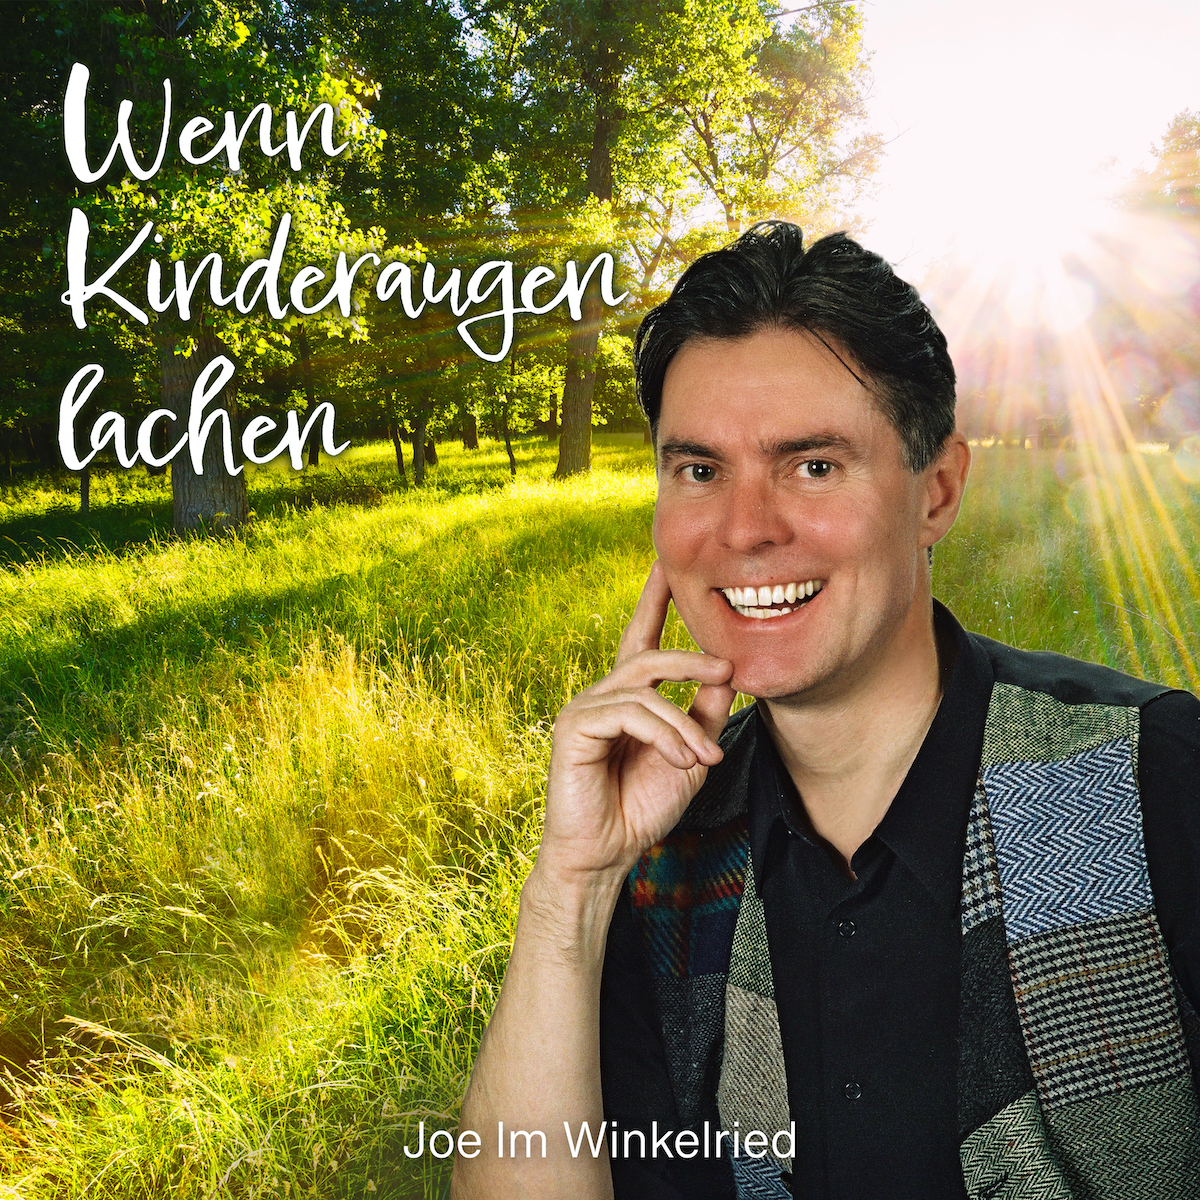 JOE IM WINKELRIED * Wenn Kinderaugen lachen (Download-Track)